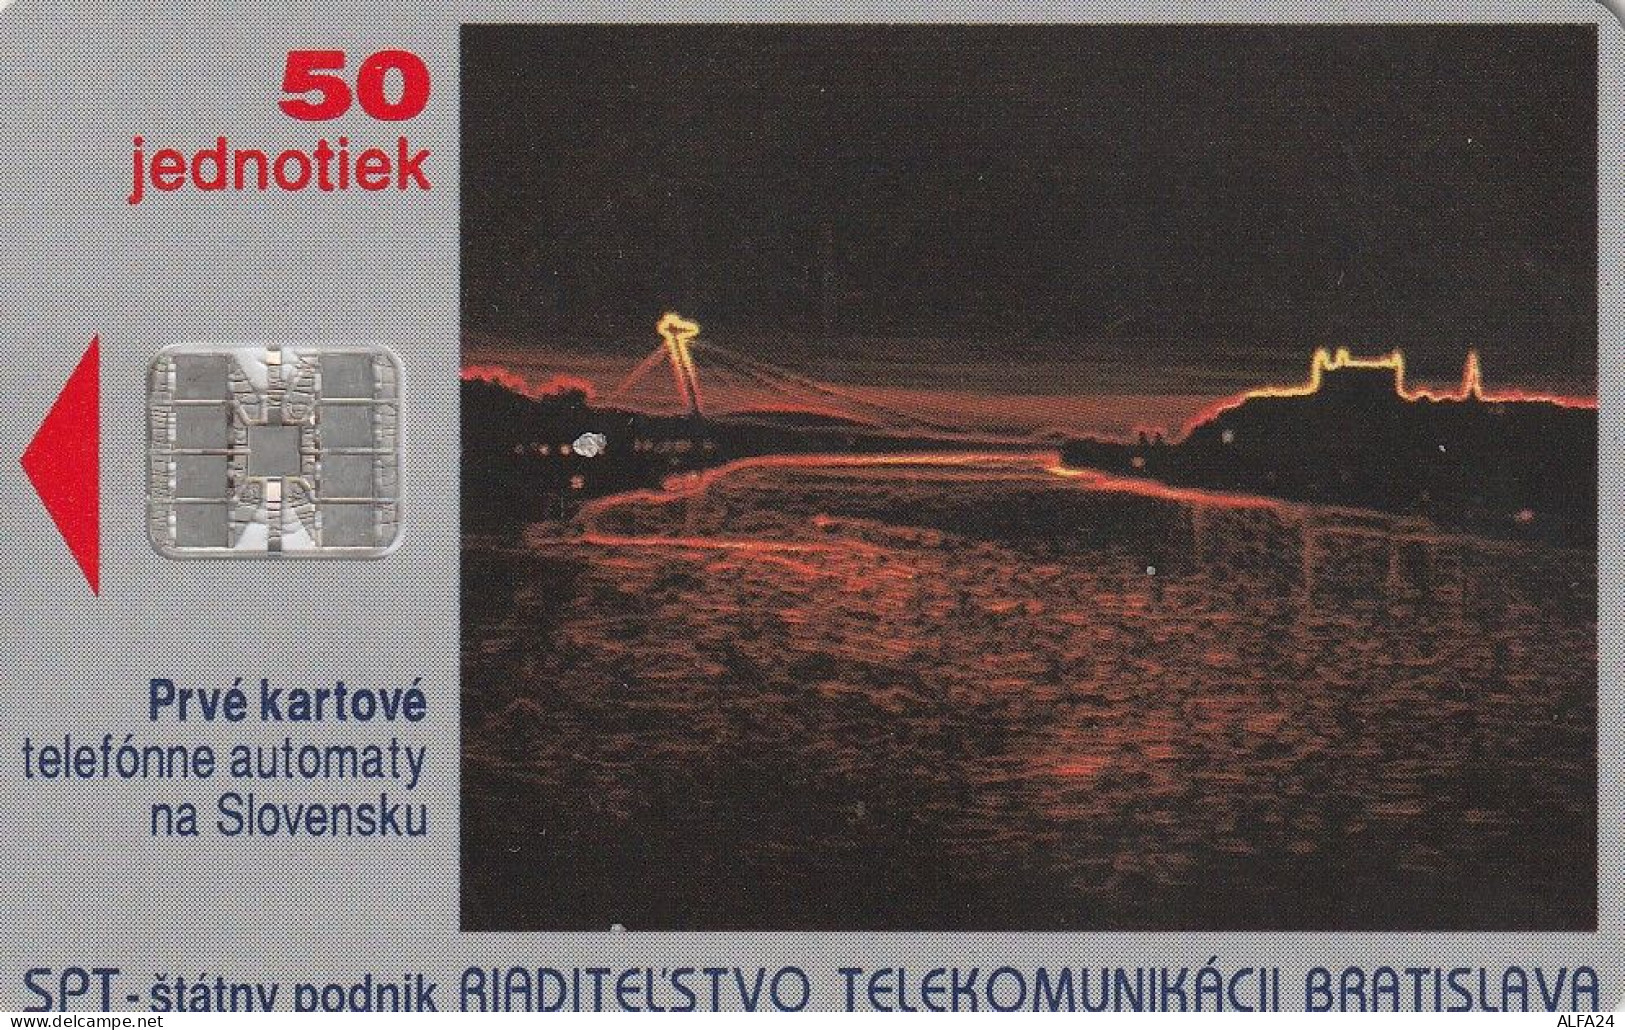 PHONE CARD SLOVACCHIA  (CZ1572 - Eslovaquia